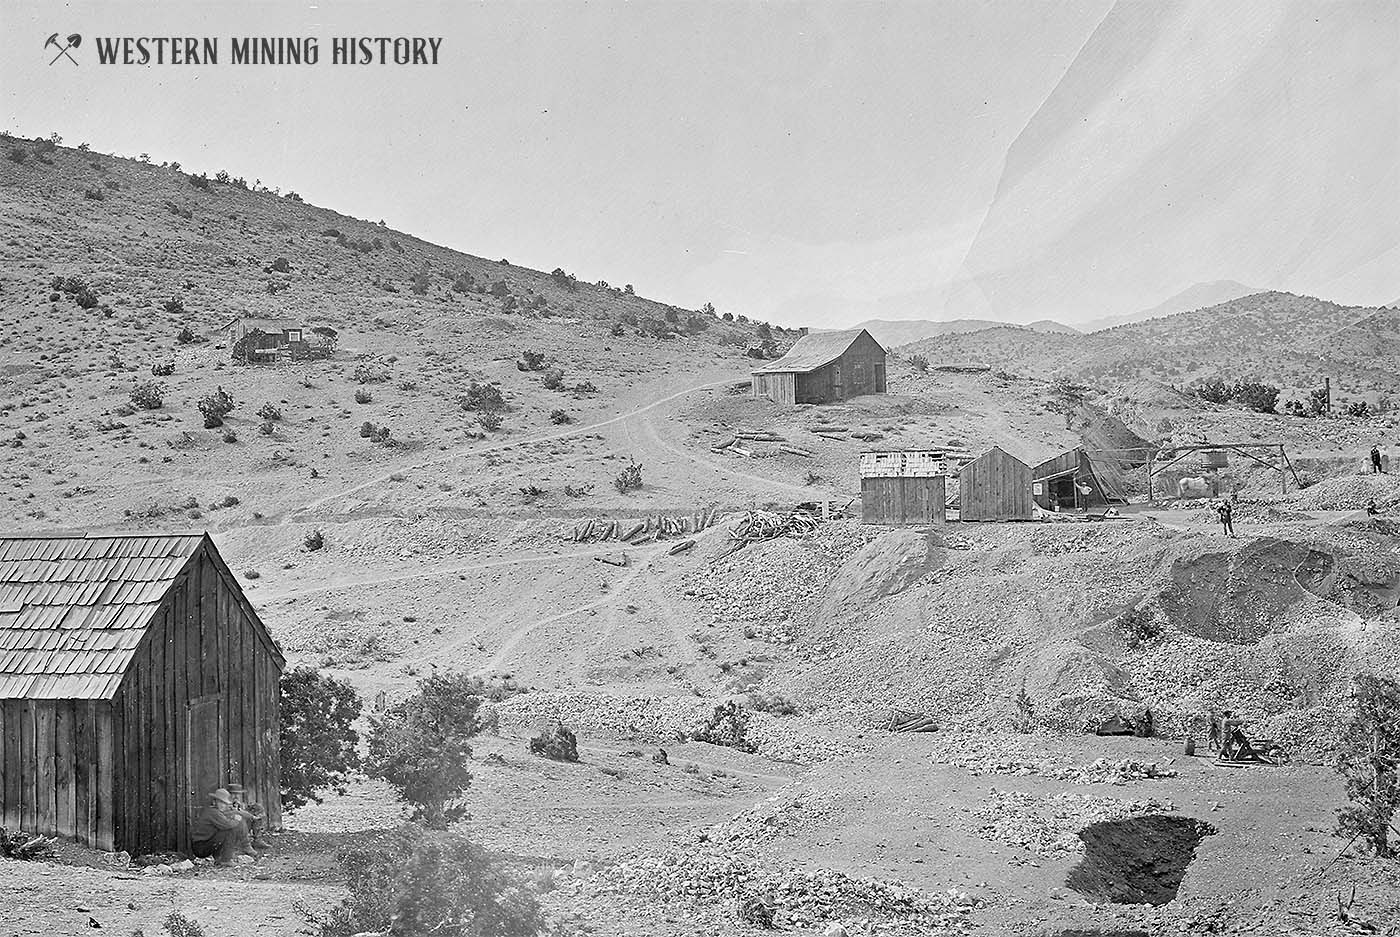 Transylvania No. 2 Mine - Belmont, Nevada 1871